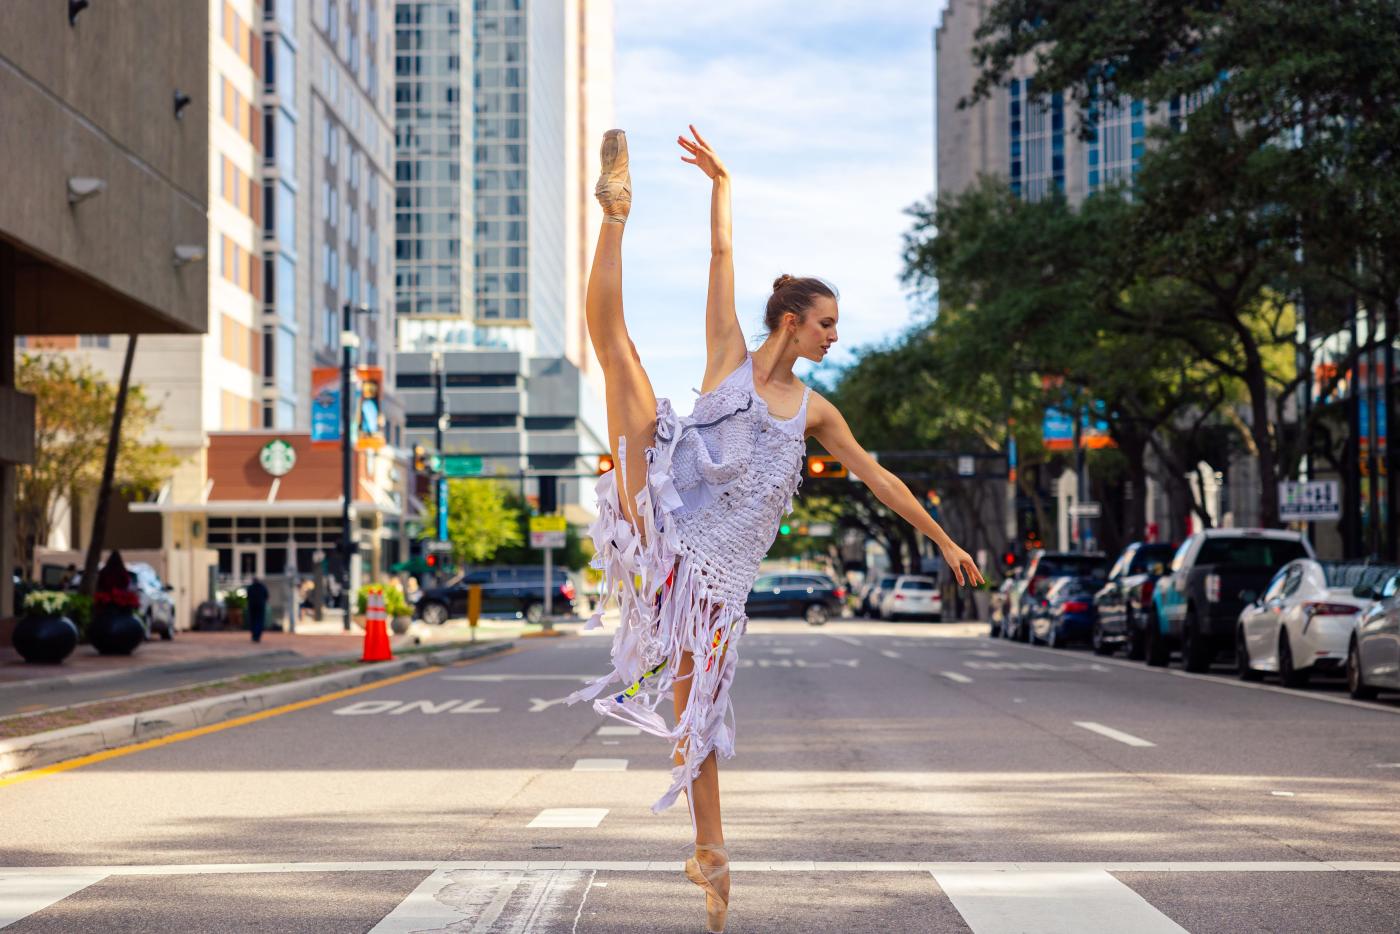 Tampa City Ballet